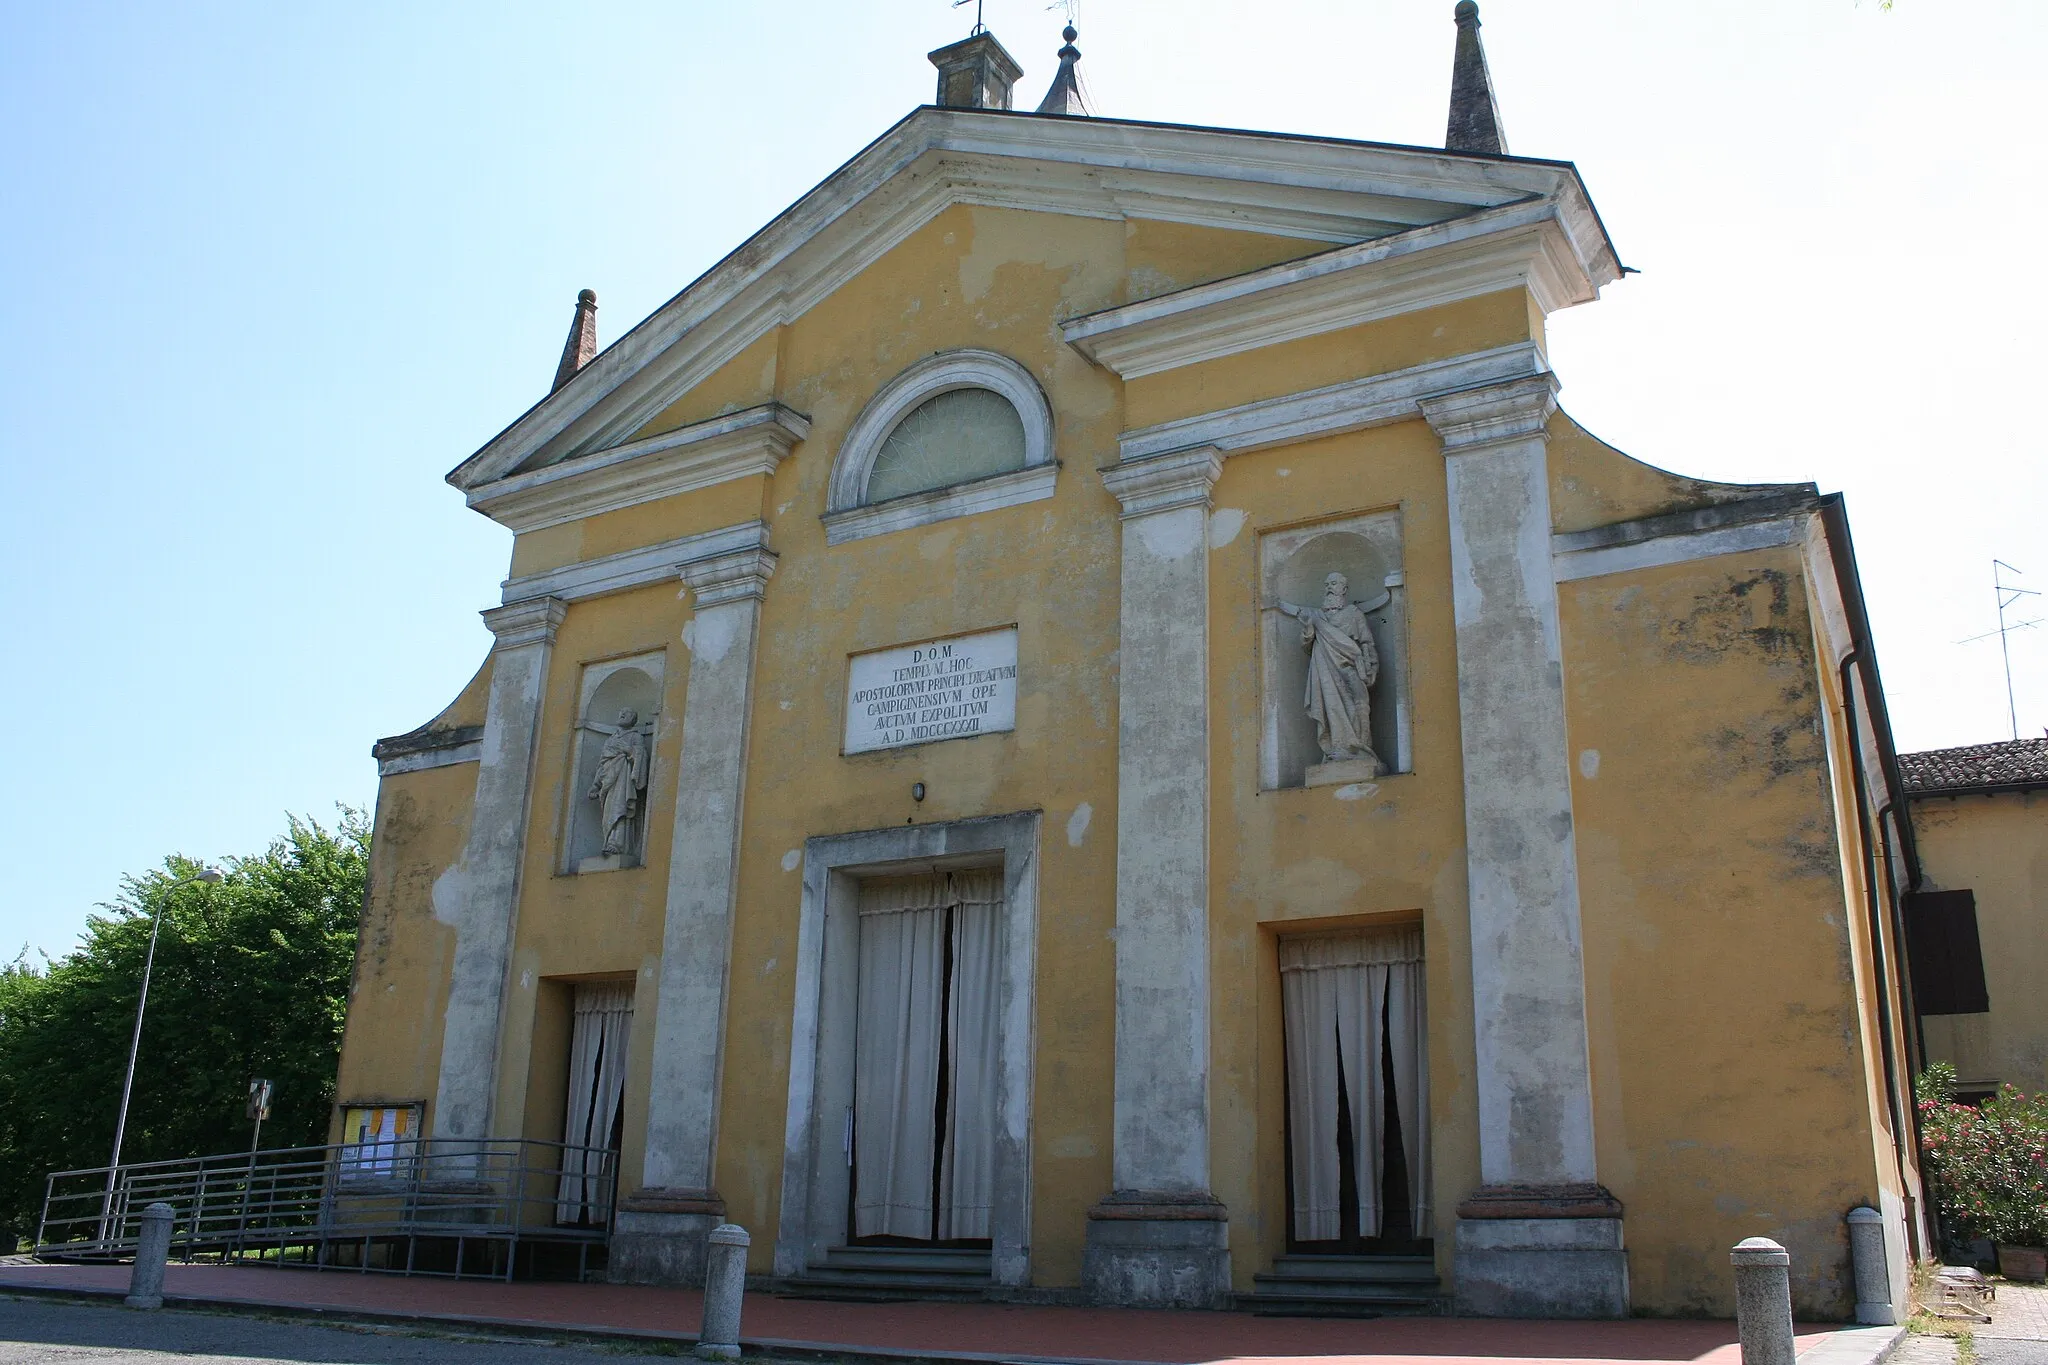 Photo showing: The Saint Peter and Saint Paul's Church in Campegine, Reggio Emilia (Italy)